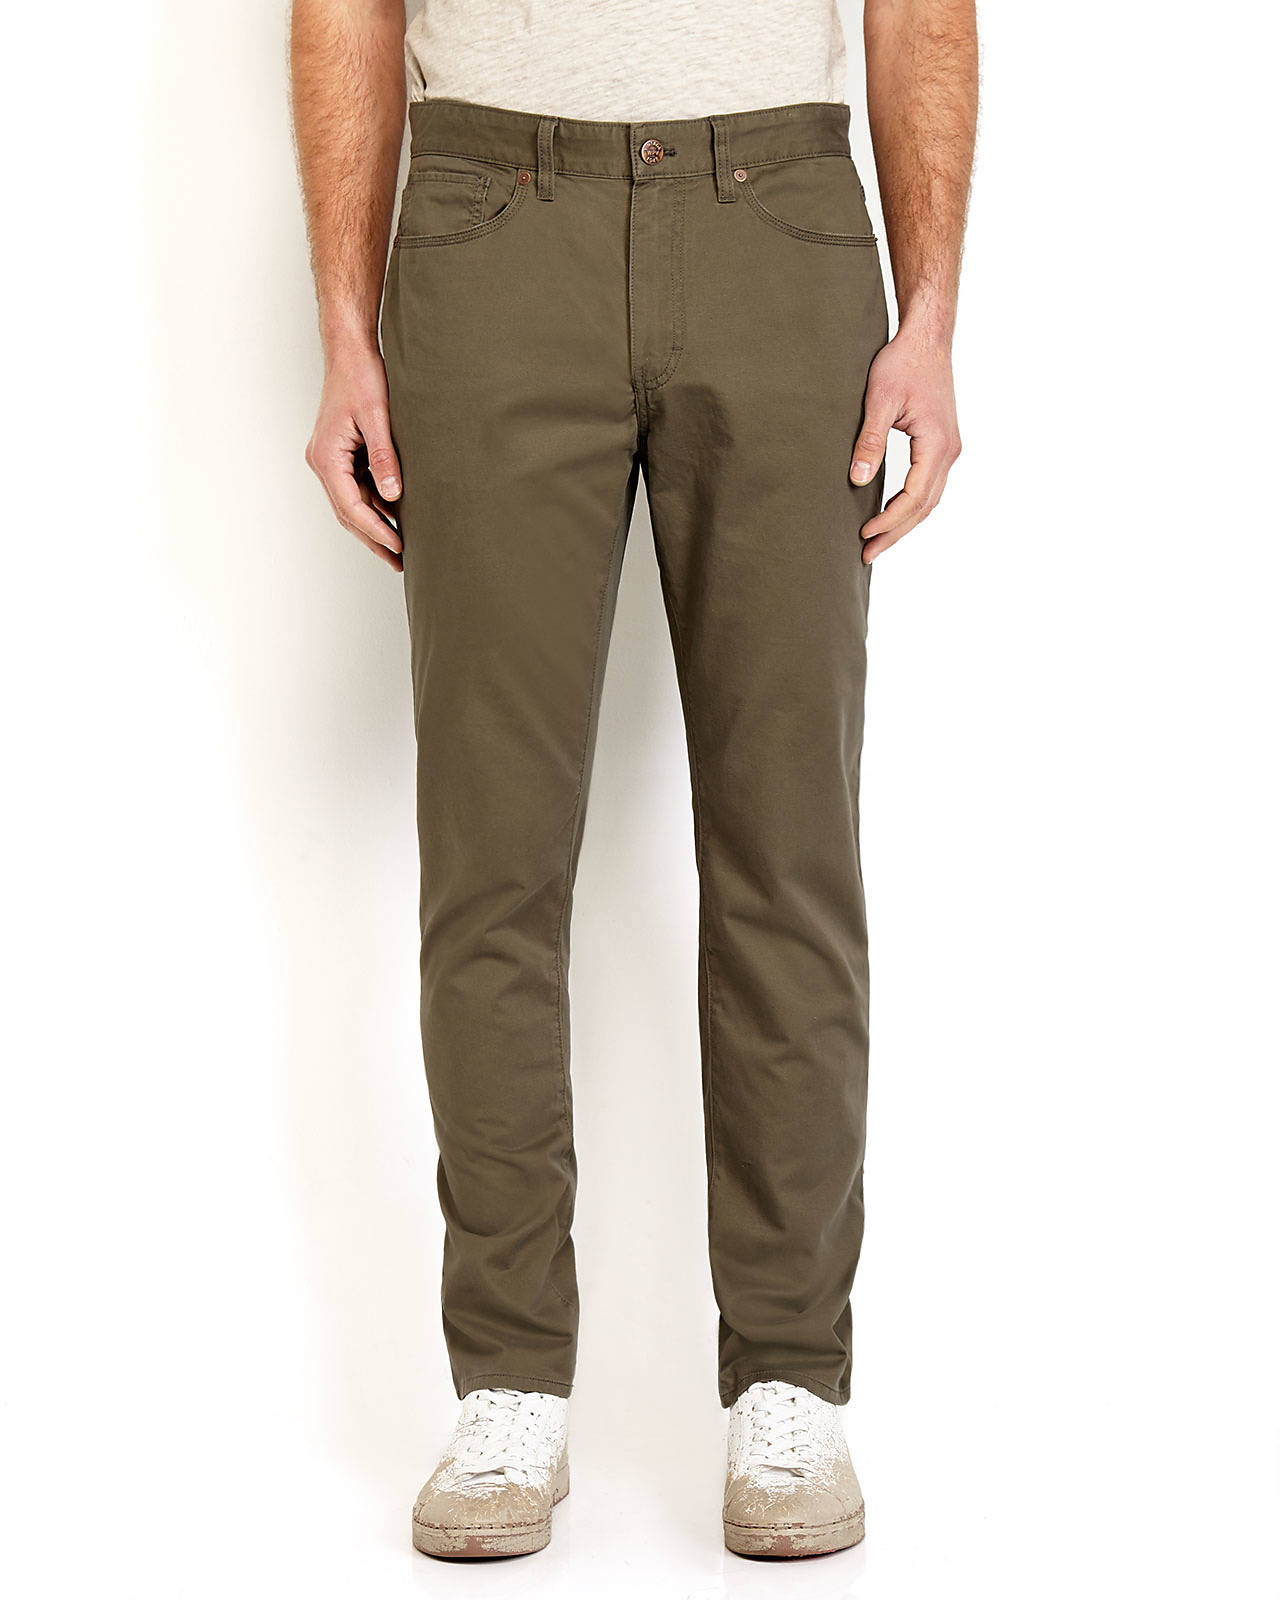 Lyst - Weatherproof Canvas Five-Pocket Twill Pants in Green for Men